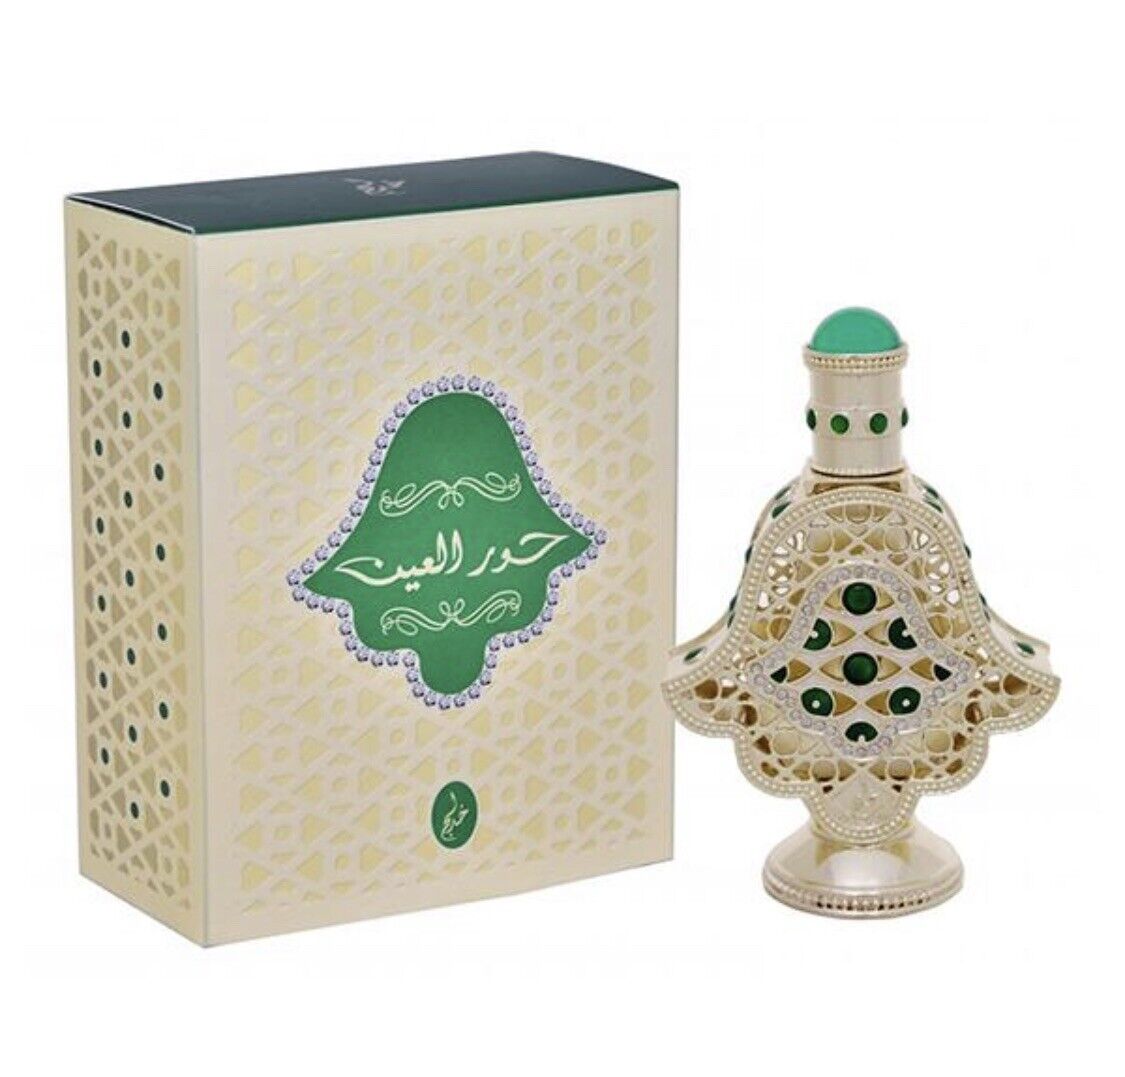 Hoor Al Ain CPO (18ml) Perfume Oil by Khadlaj | Khan El Khalili